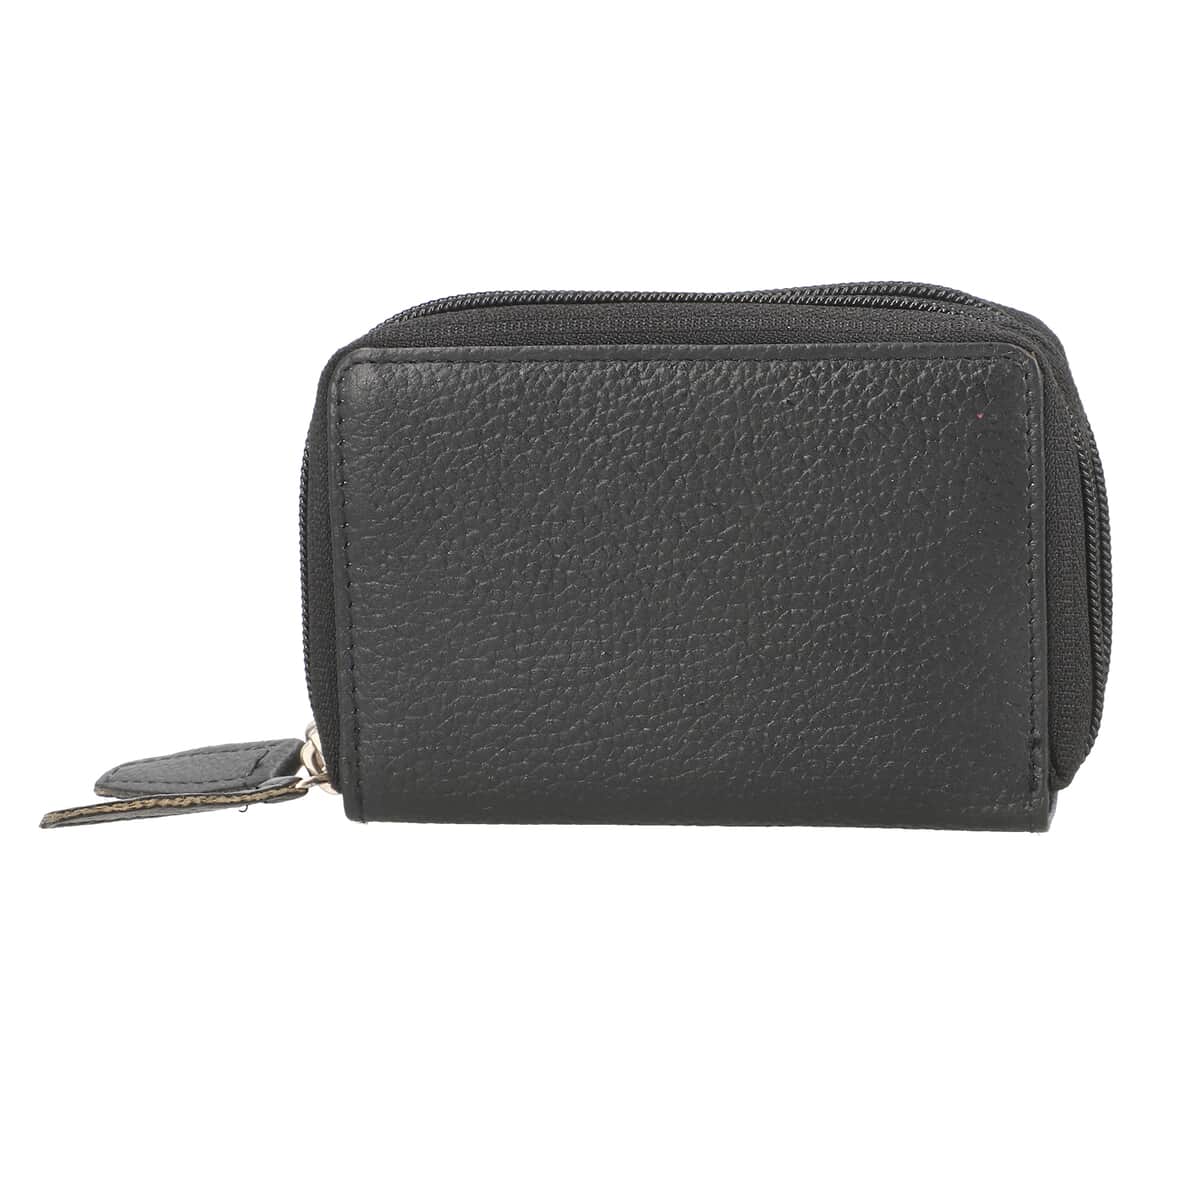 Passage Black Genuine Leather RFID Women's Wallet image number 0